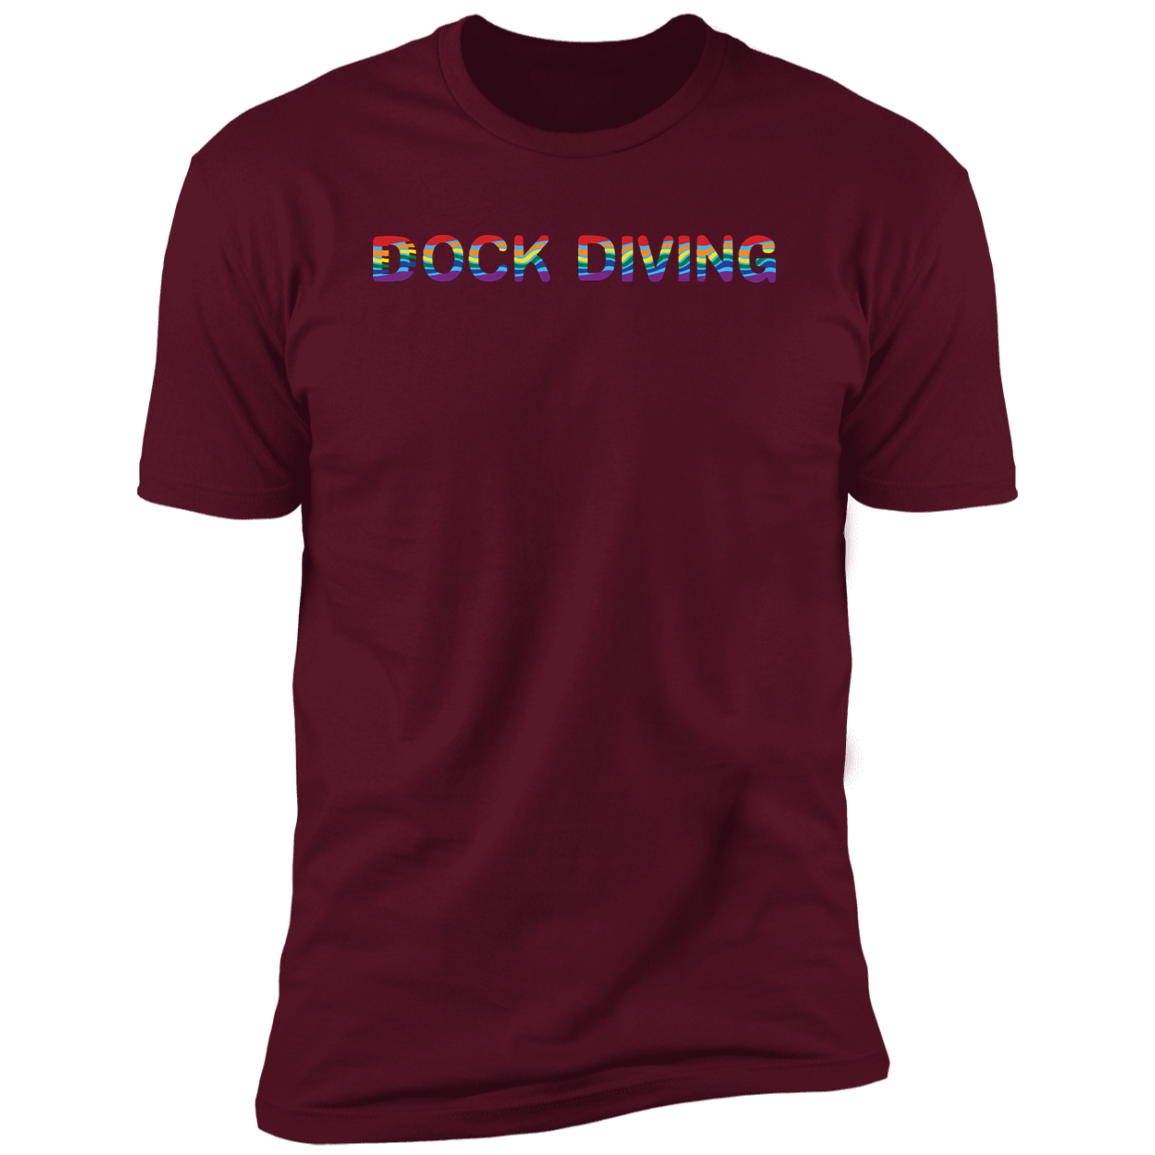 Dock Diving Pride Dock diving t-shirt, dog pride dock diving shirt for humans, in maroon